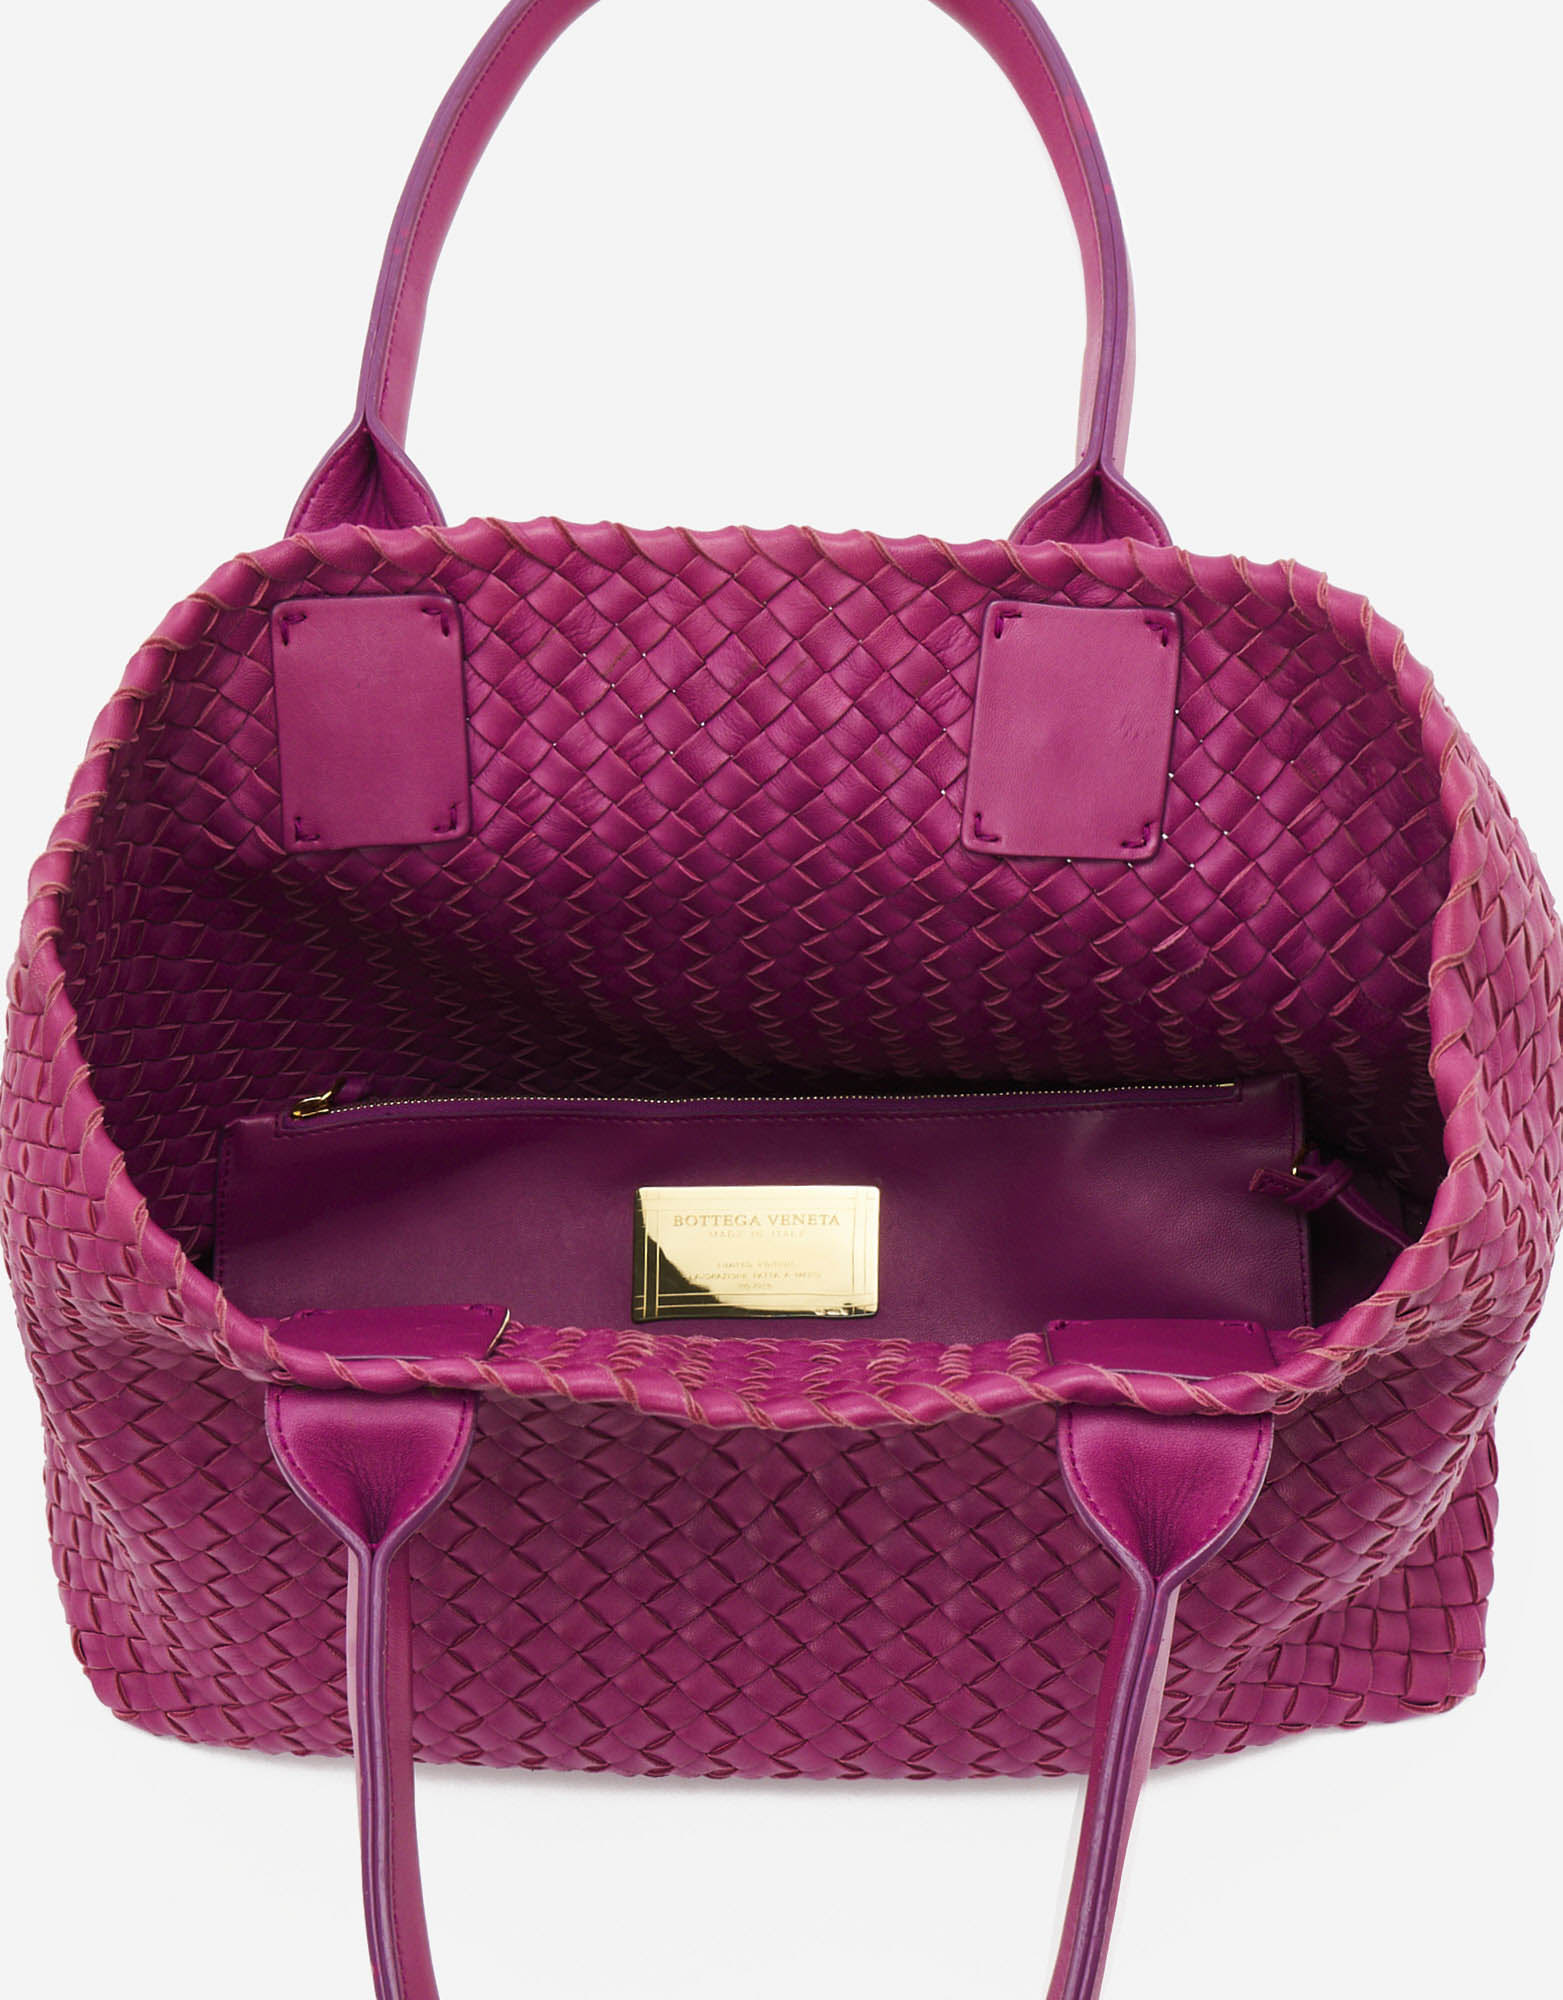 Pre-owned Bottega Veneta bag Cabat Small Intrecciato Purple Pink, Violet | Sell your designer bag on Saclab.com